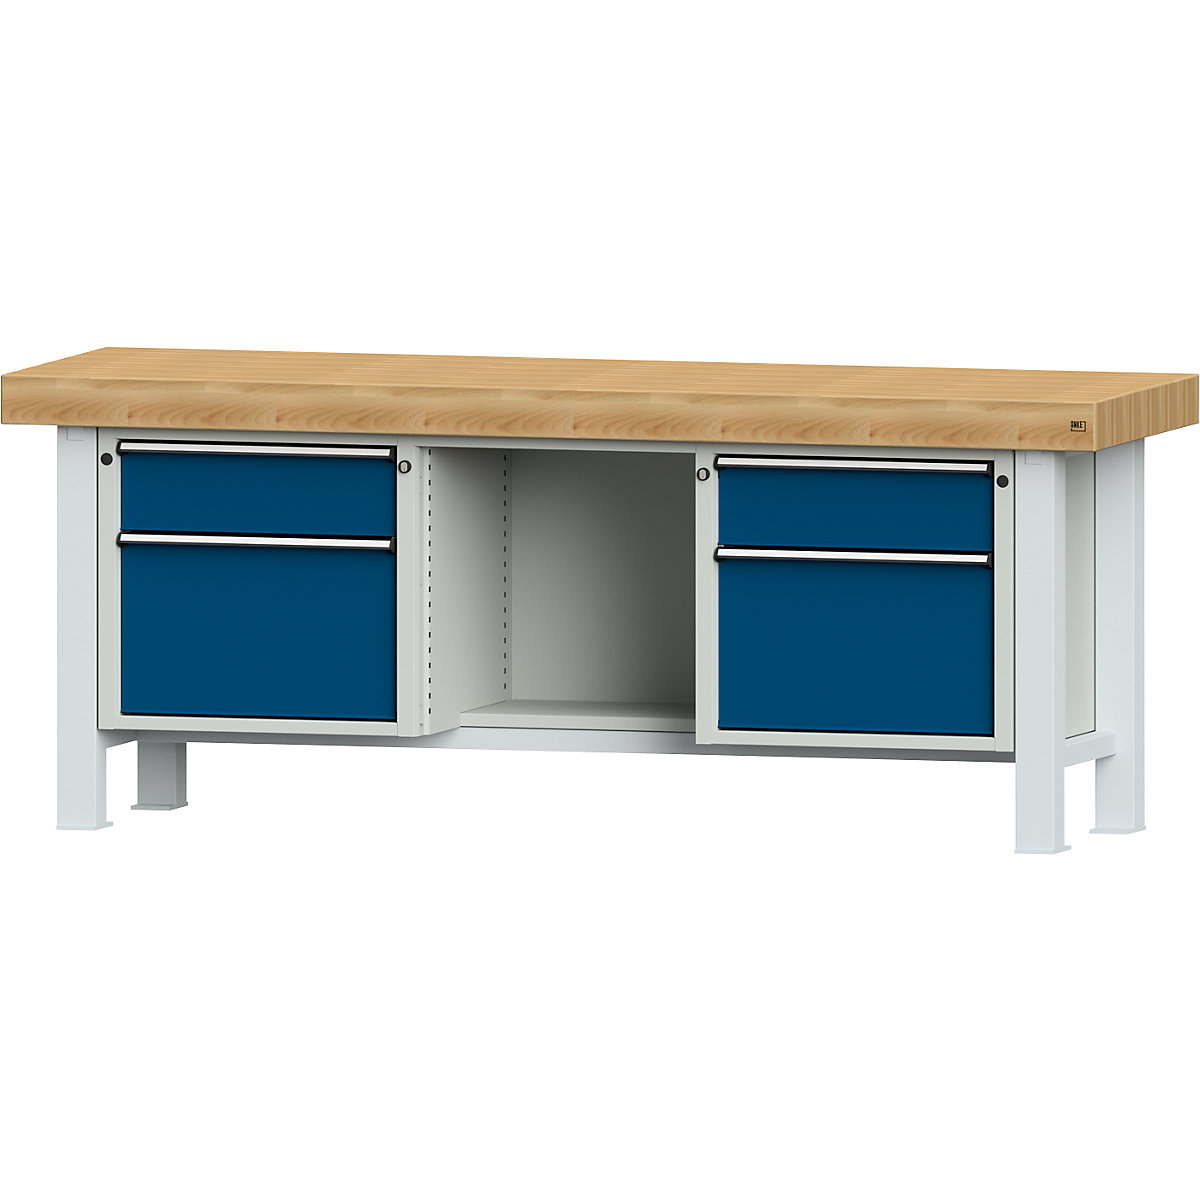 Radni stol za teške terete – ANKE, širina ploče 2250 mm, s 2 ladice i 2 krilna vrata, 1 otvoreni pretinac, debljina ploče 100 mm-1